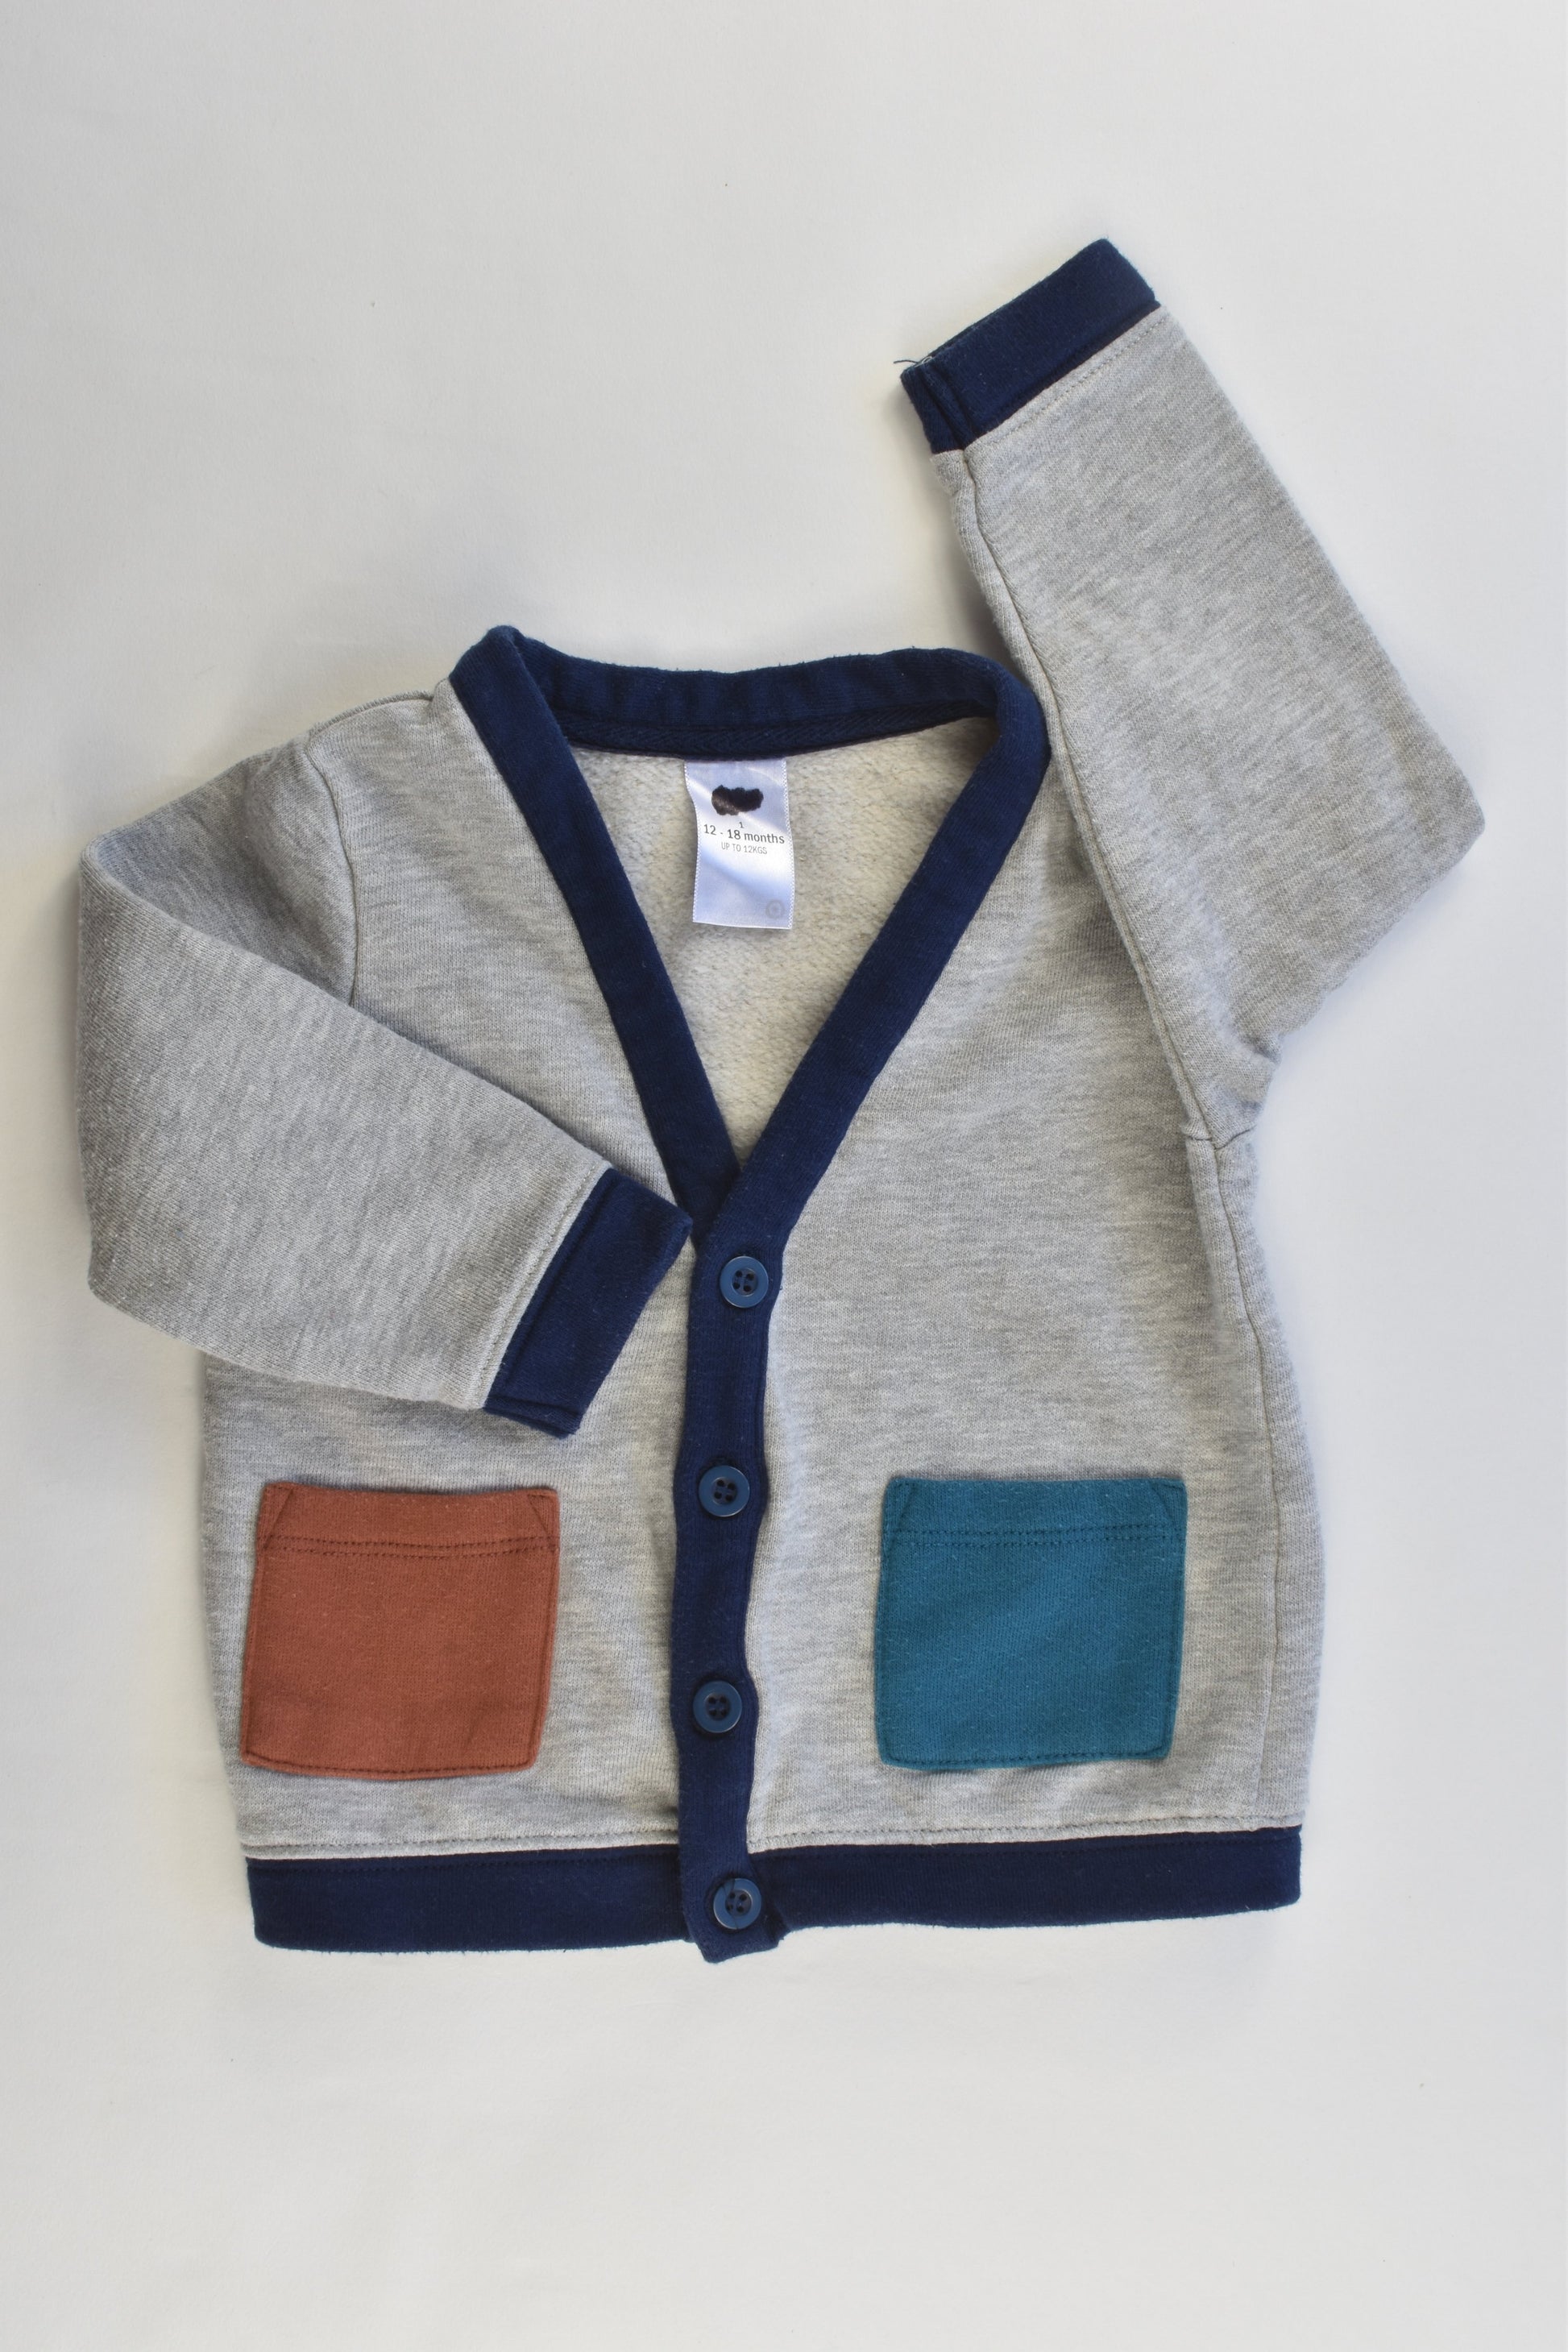 Target Size 12-18 months (1) Sweater Cardigan